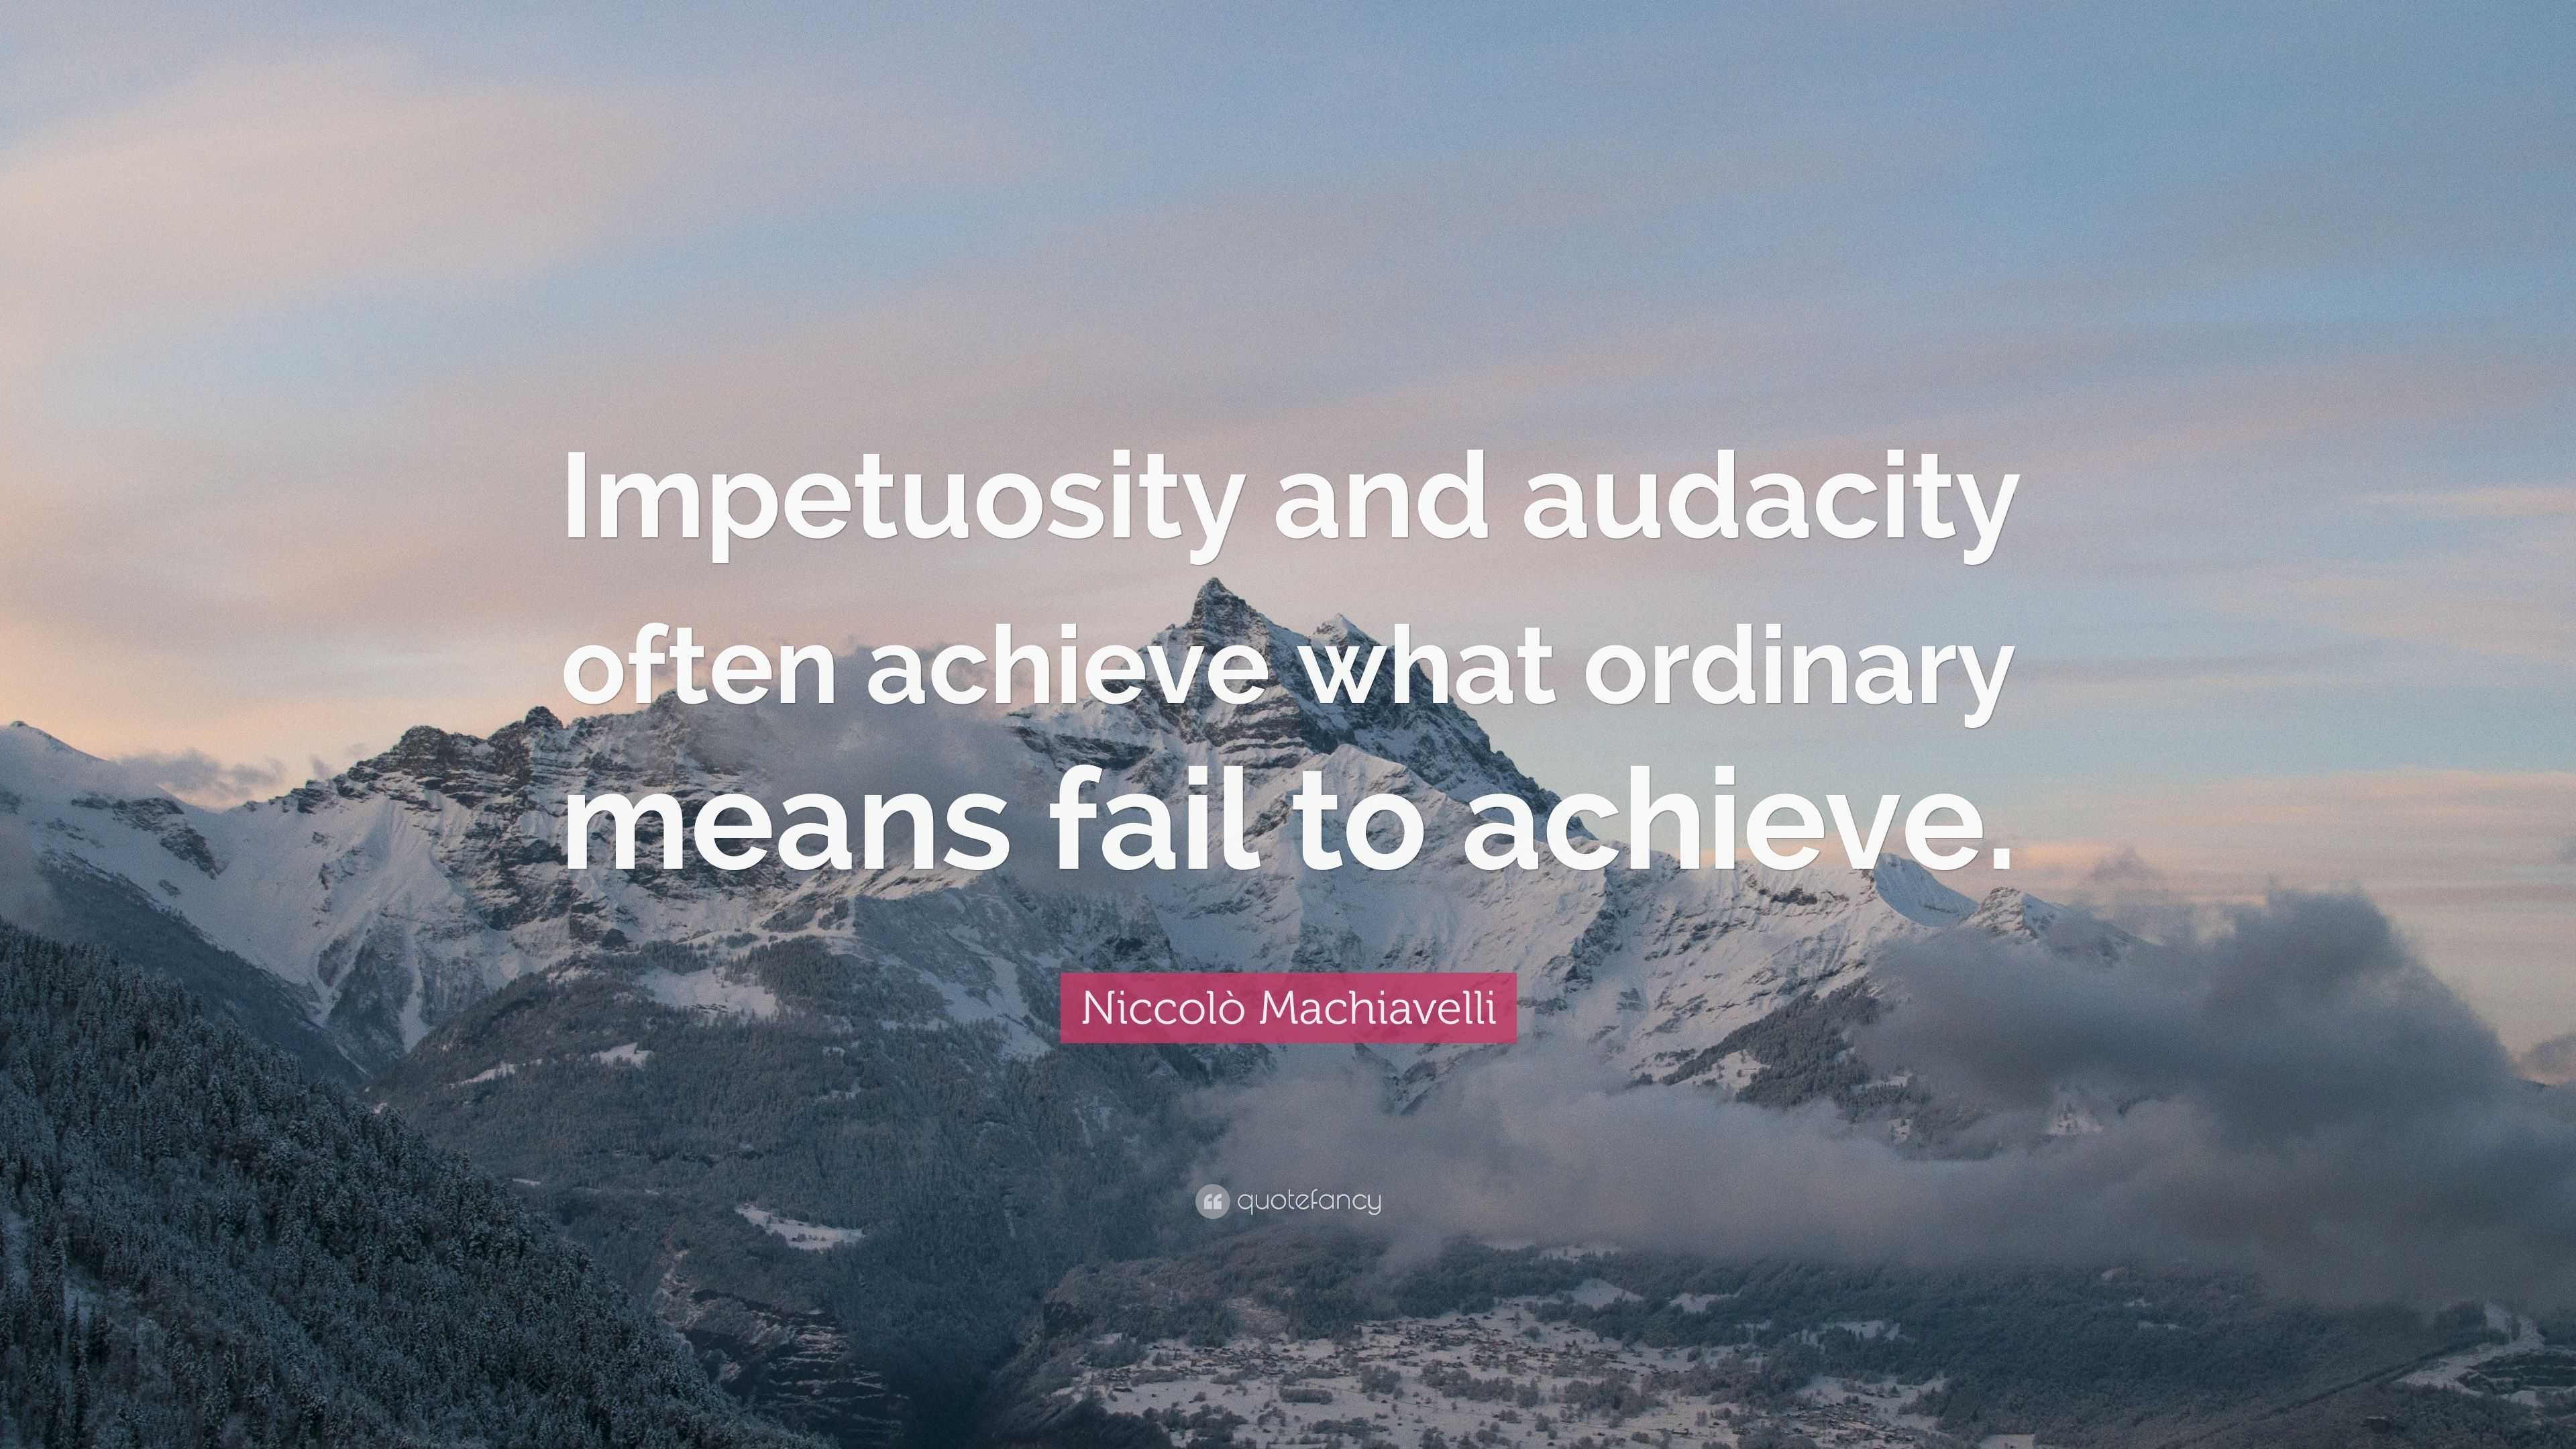 Niccolò Machiavelli Quote: “Impetuosity and audacity often achieve what ...